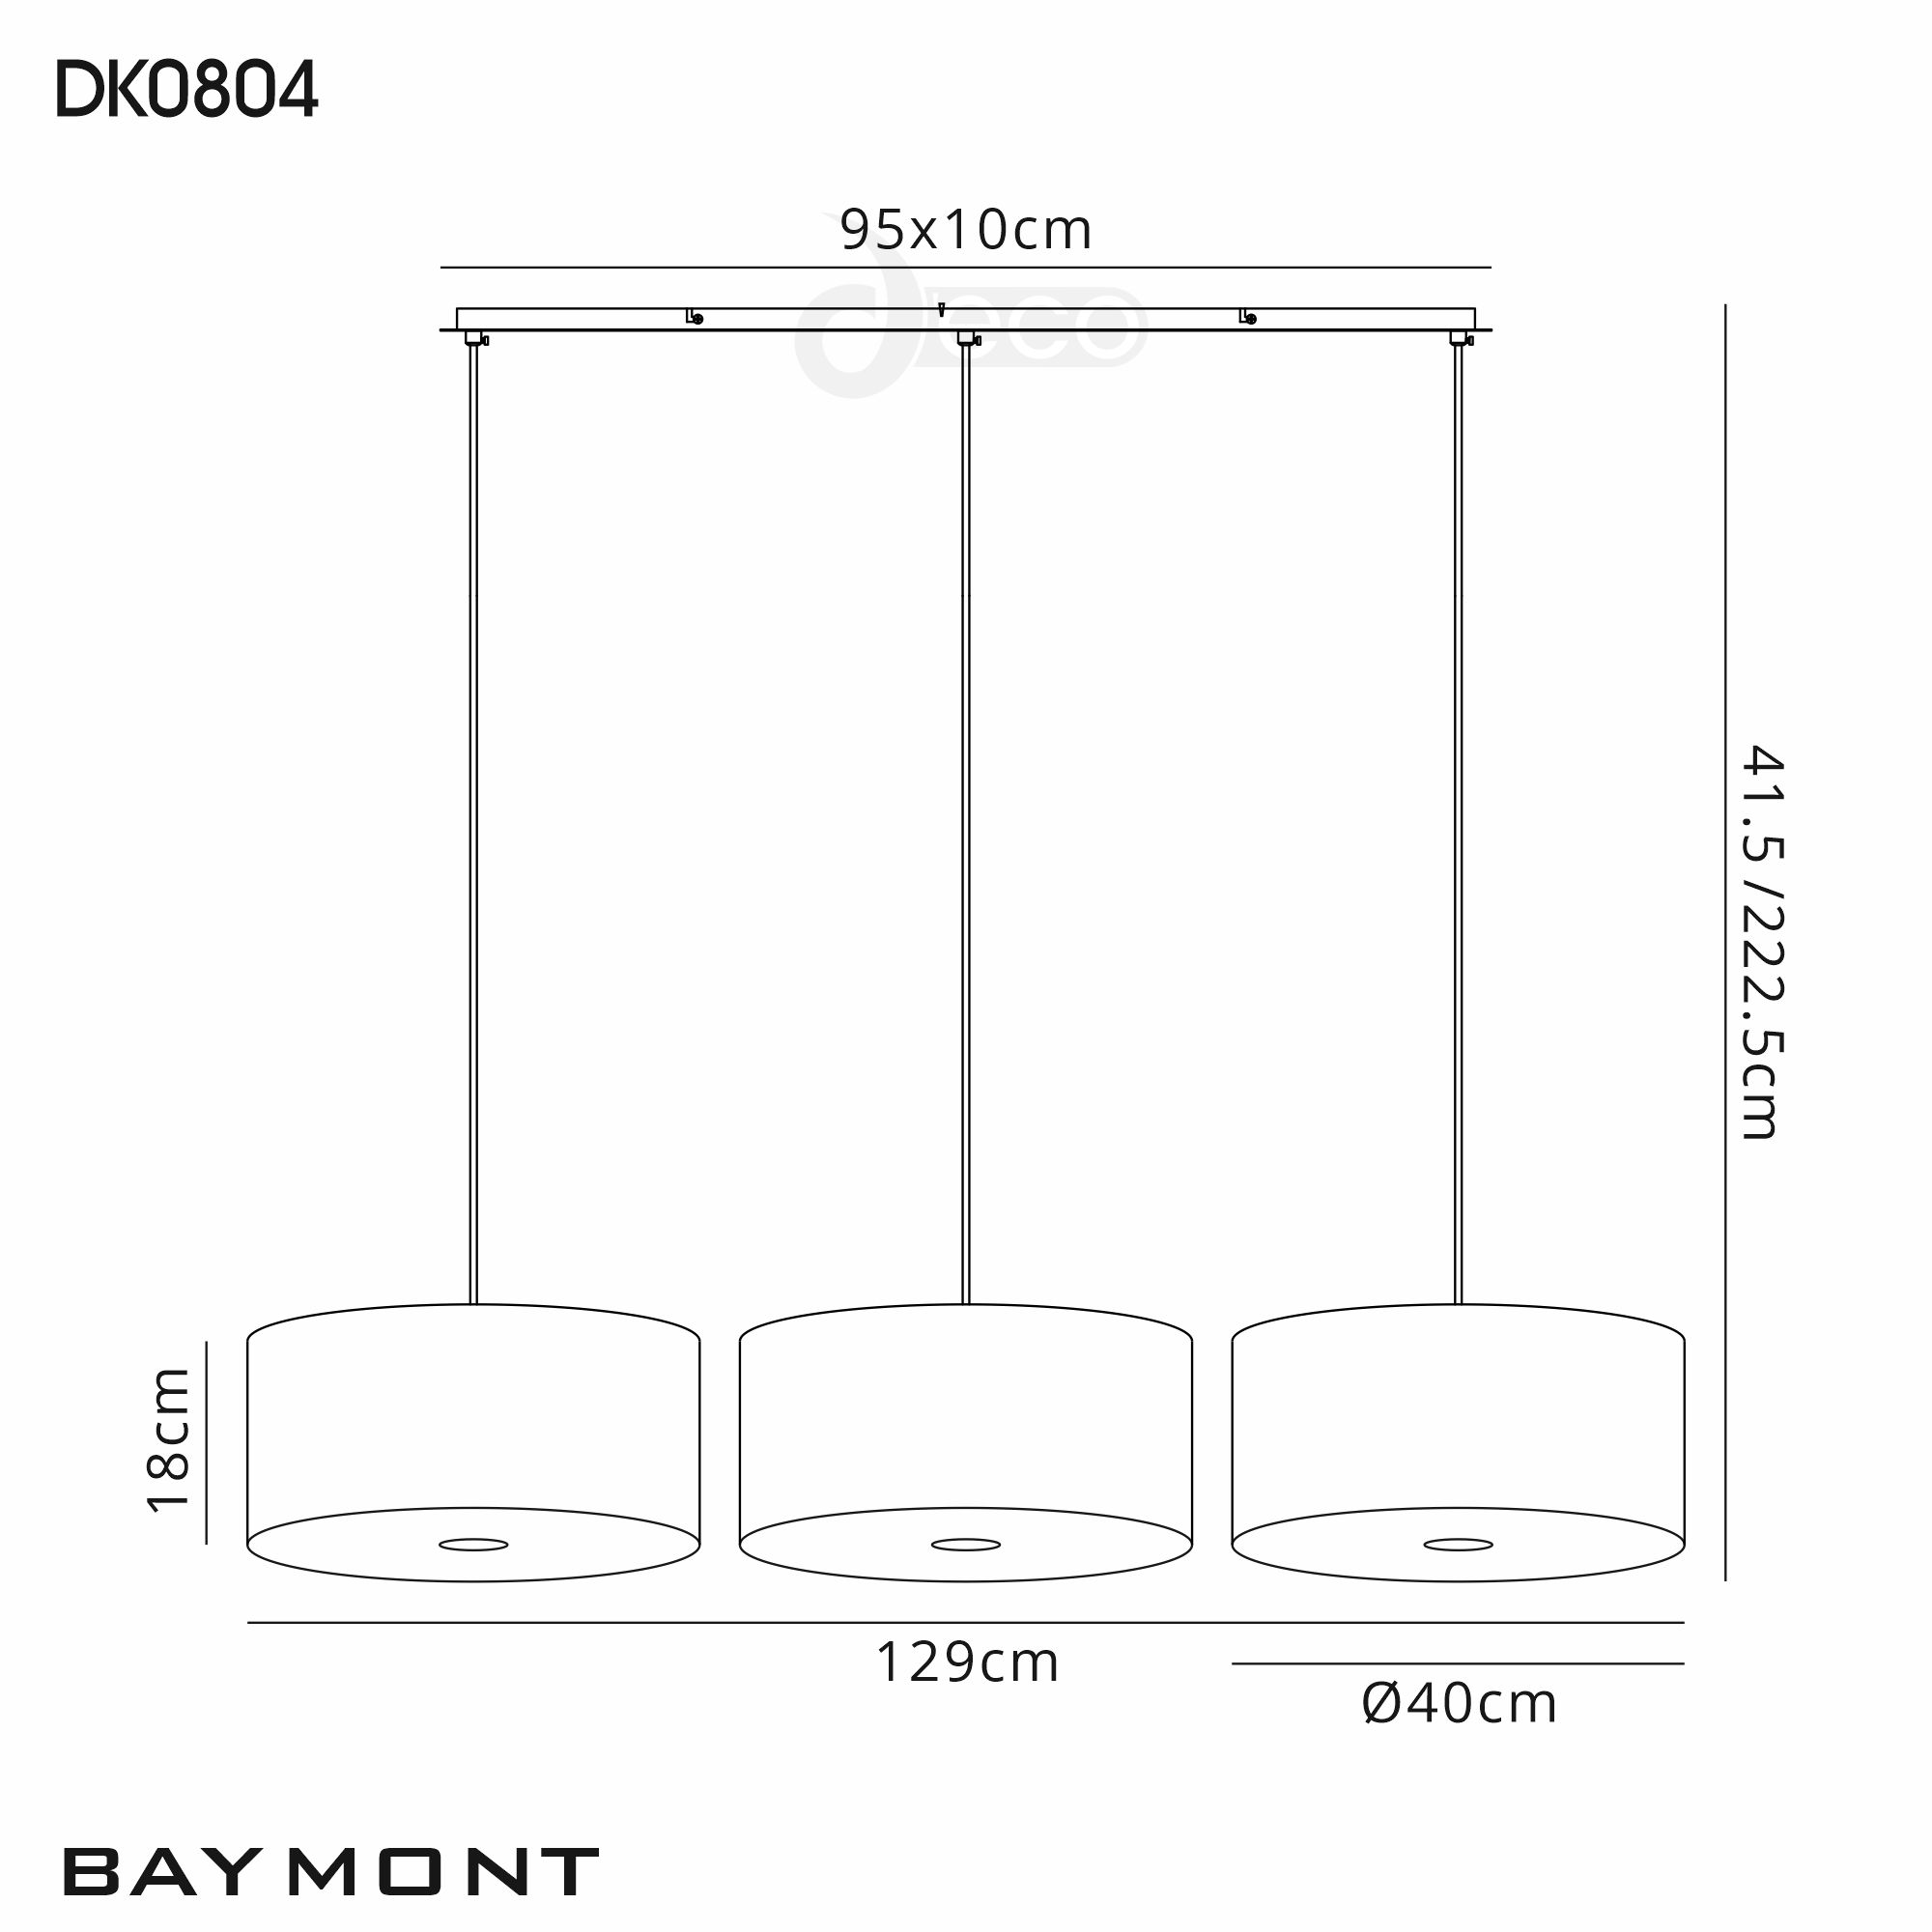 DK0804  Baymont 40cm Shade 2m 3 Light Pendant